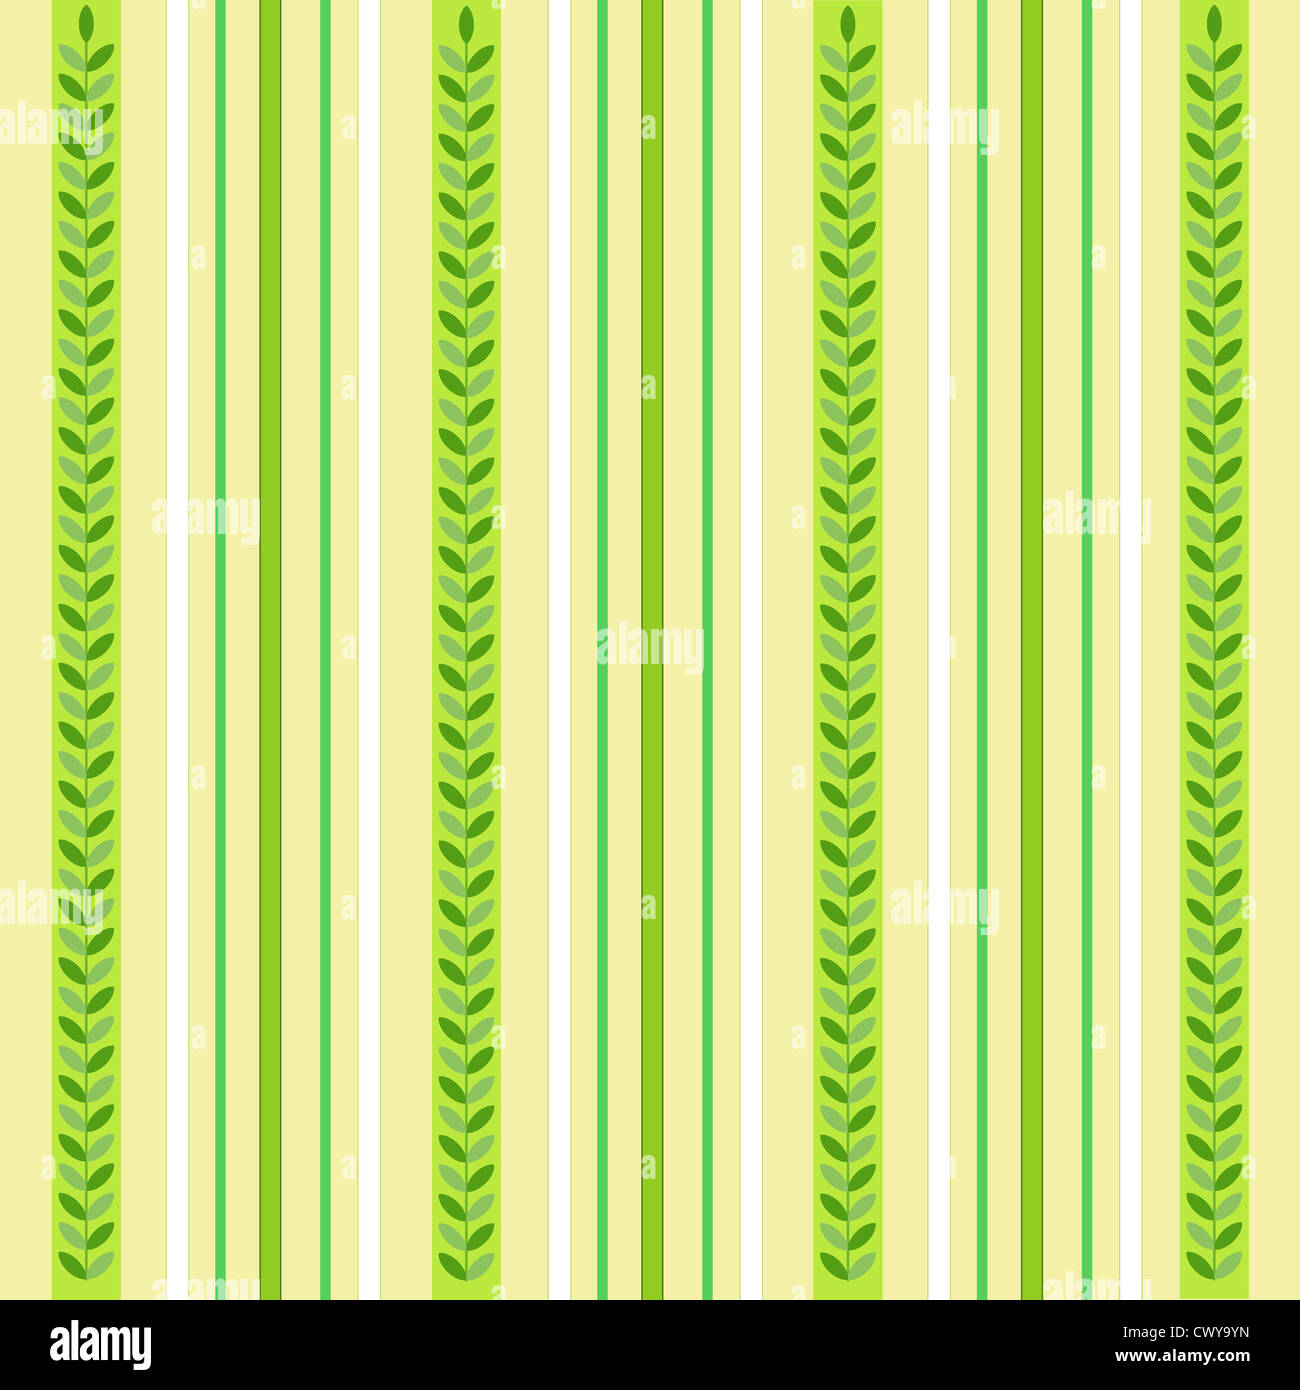 Green leaves stripes pattern Stock Photo